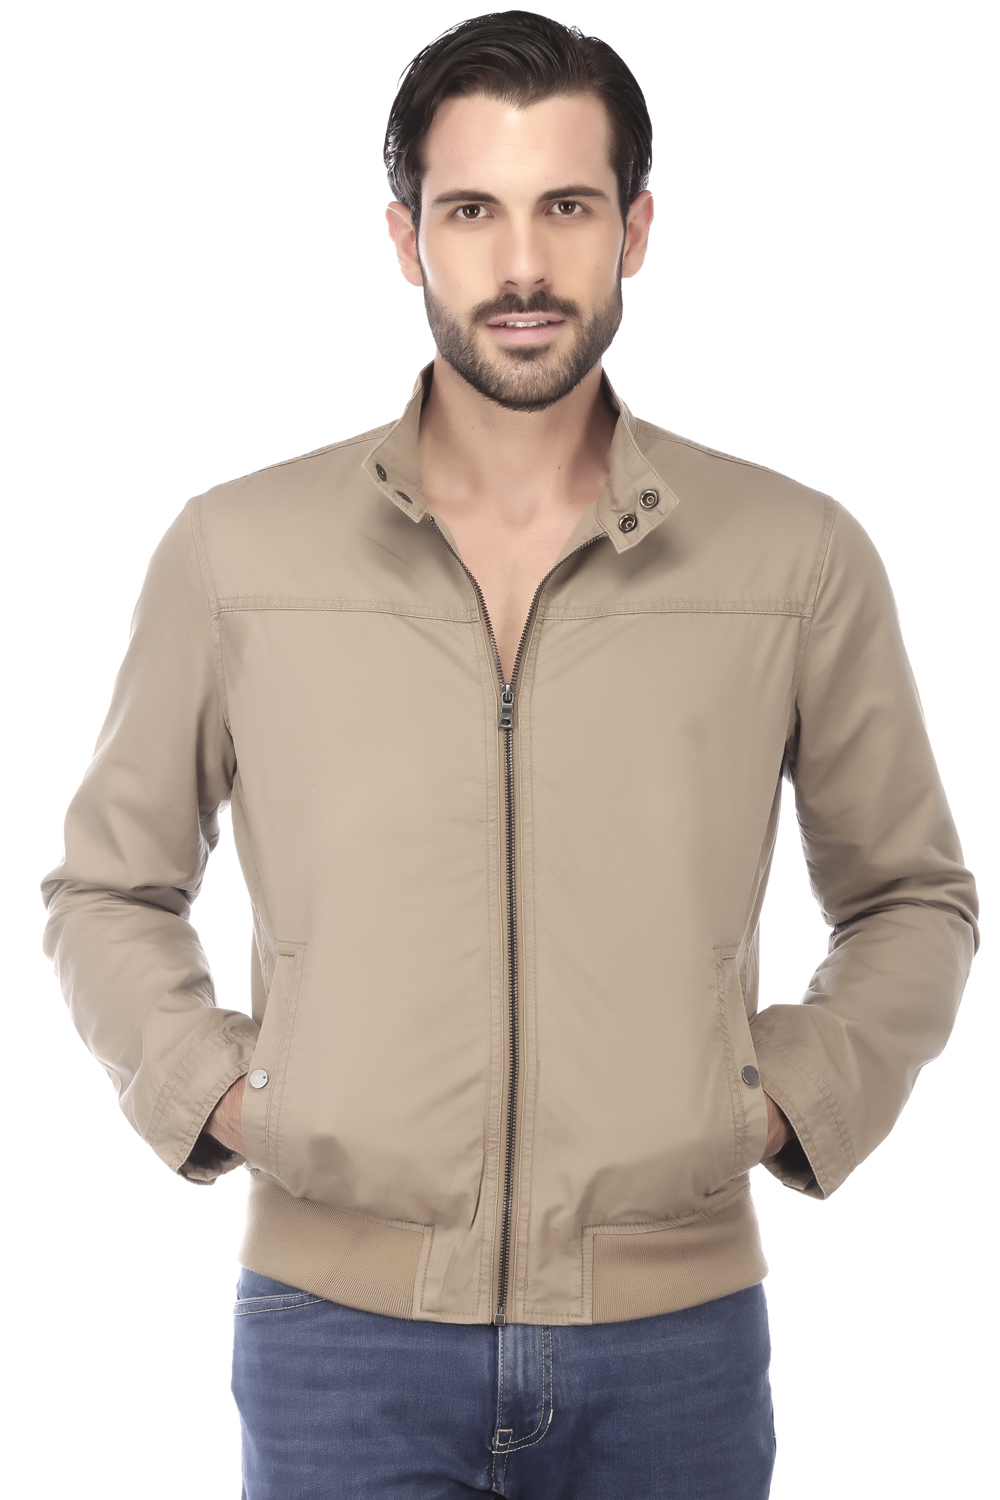 Buy Celio Beige Long Sleeve Jacket For Men Online @ ₹1849 from ShopClues